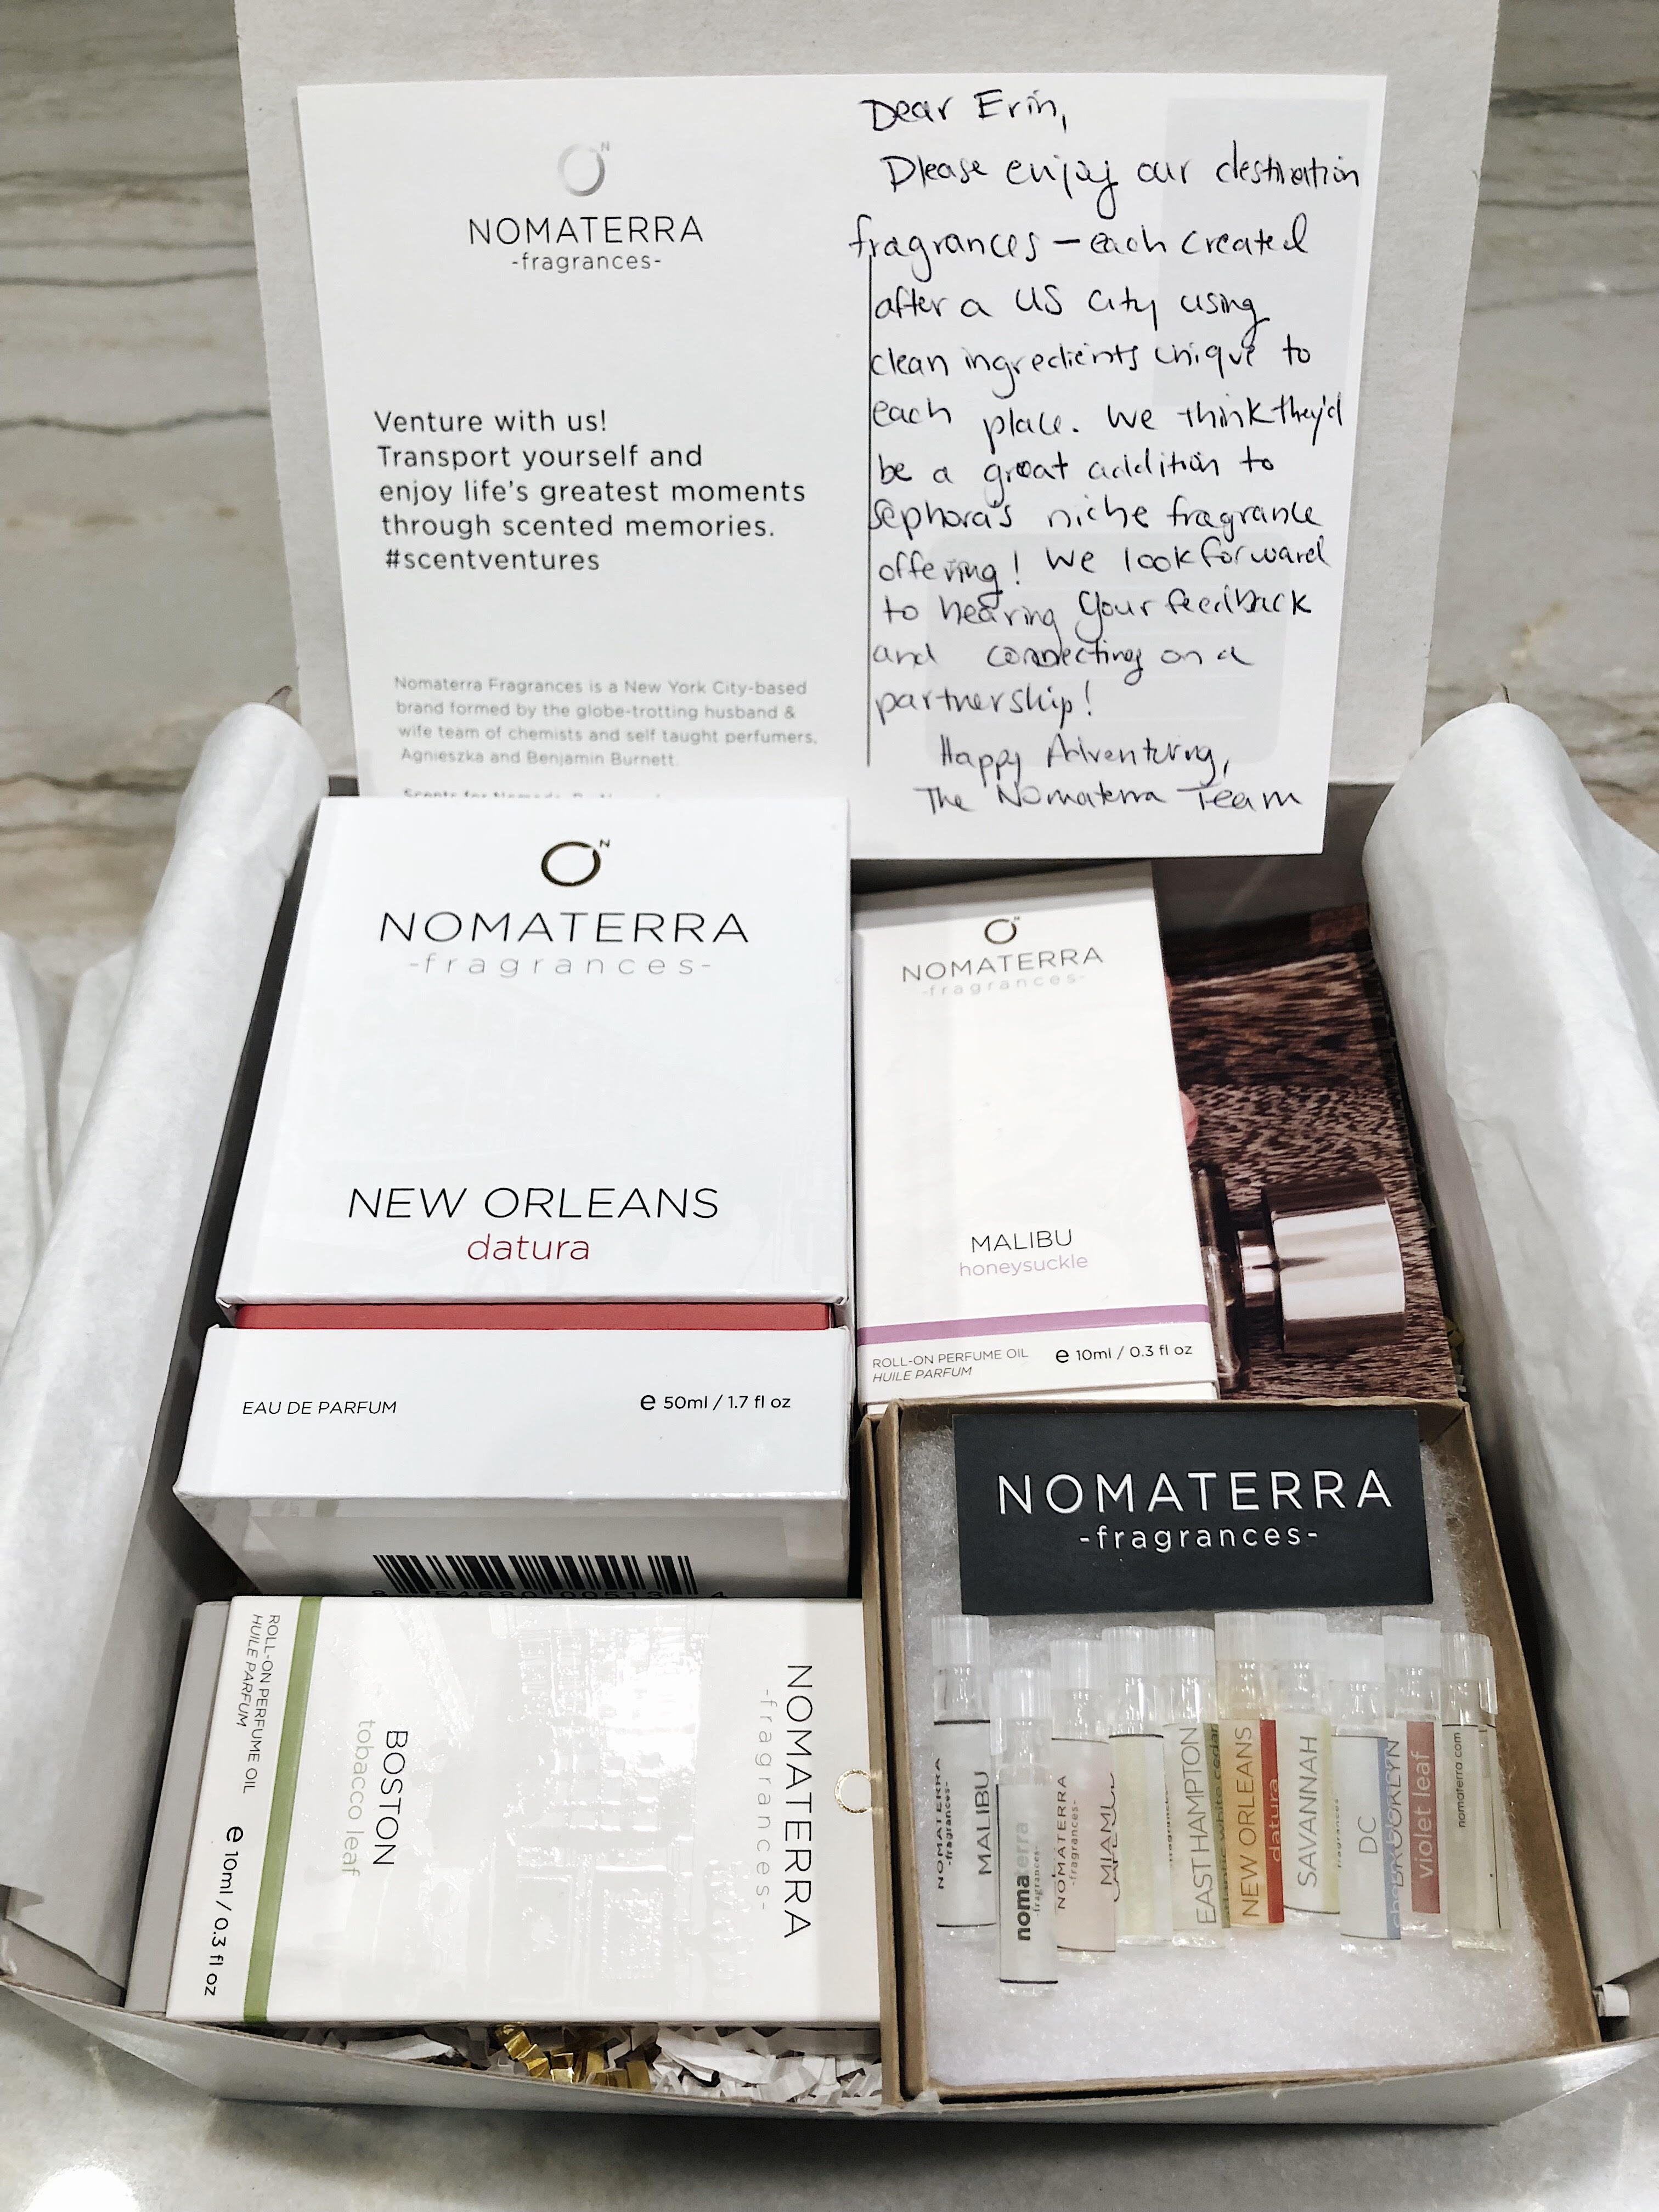 nomaterra products inside gift box, fragrances inside sample box